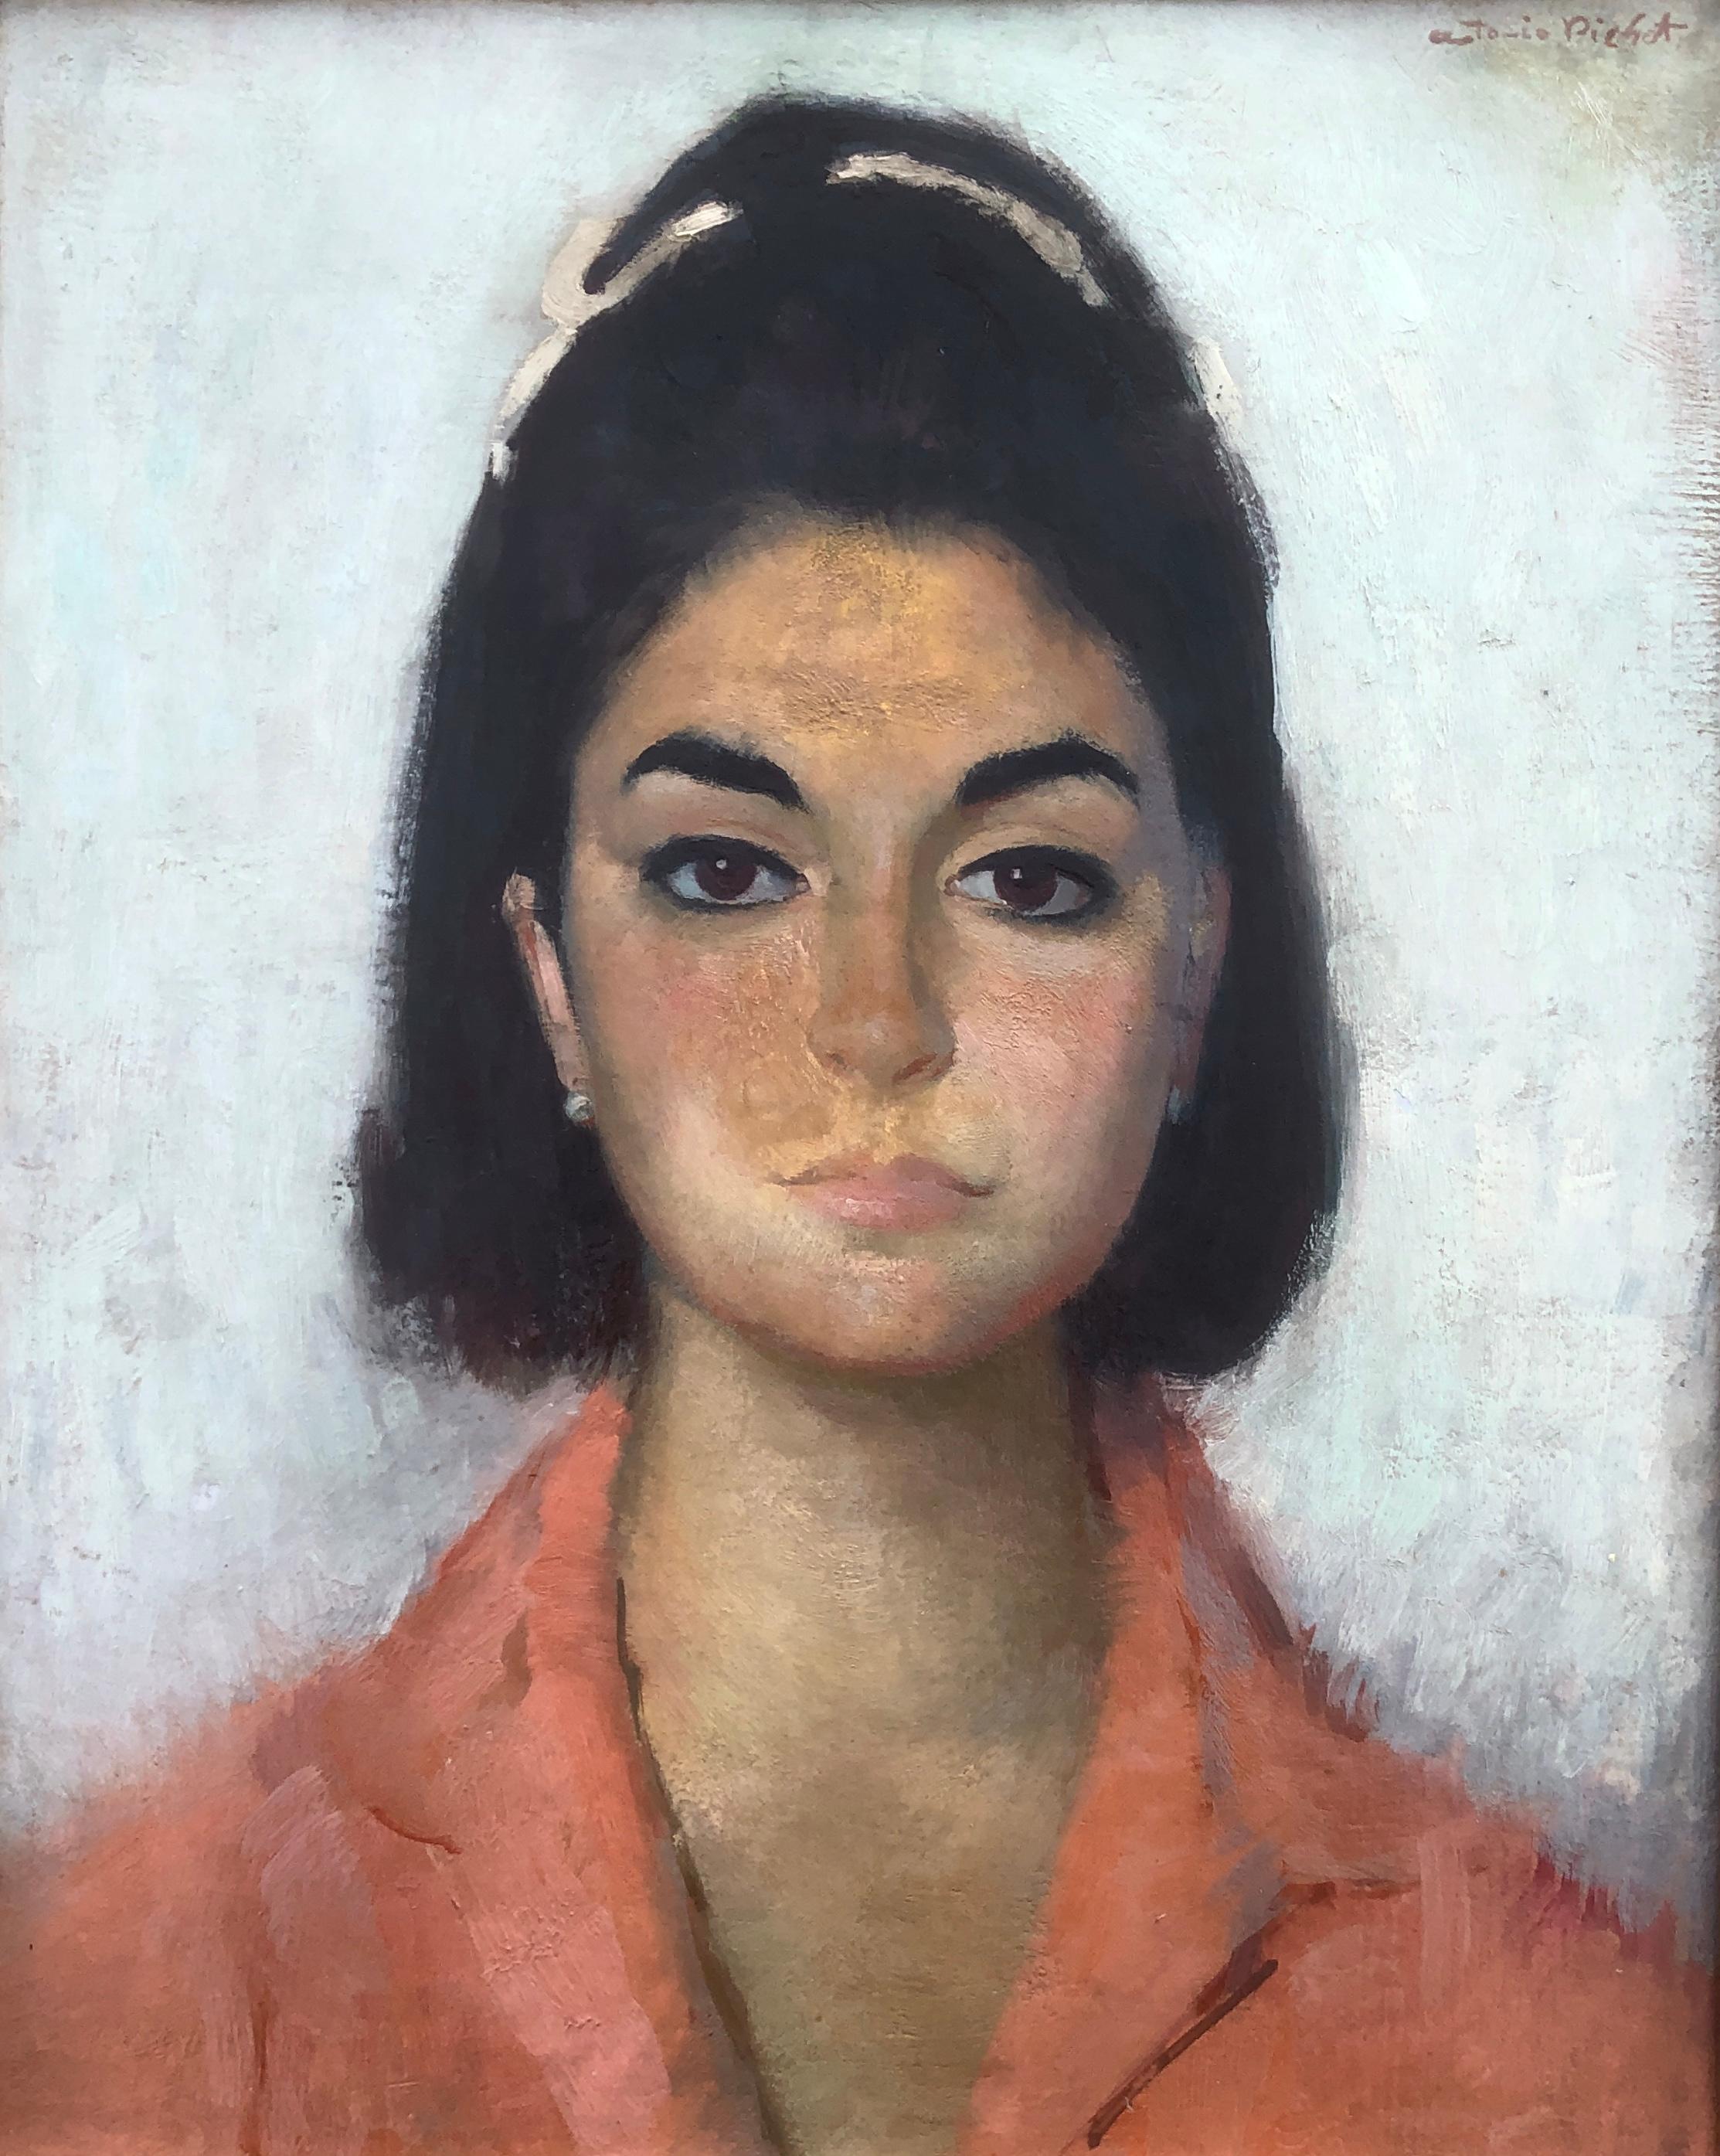 Antoni Pitxot Portrait Painting – Frauenporträt Öl auf Leinwand Gemälde pitxot